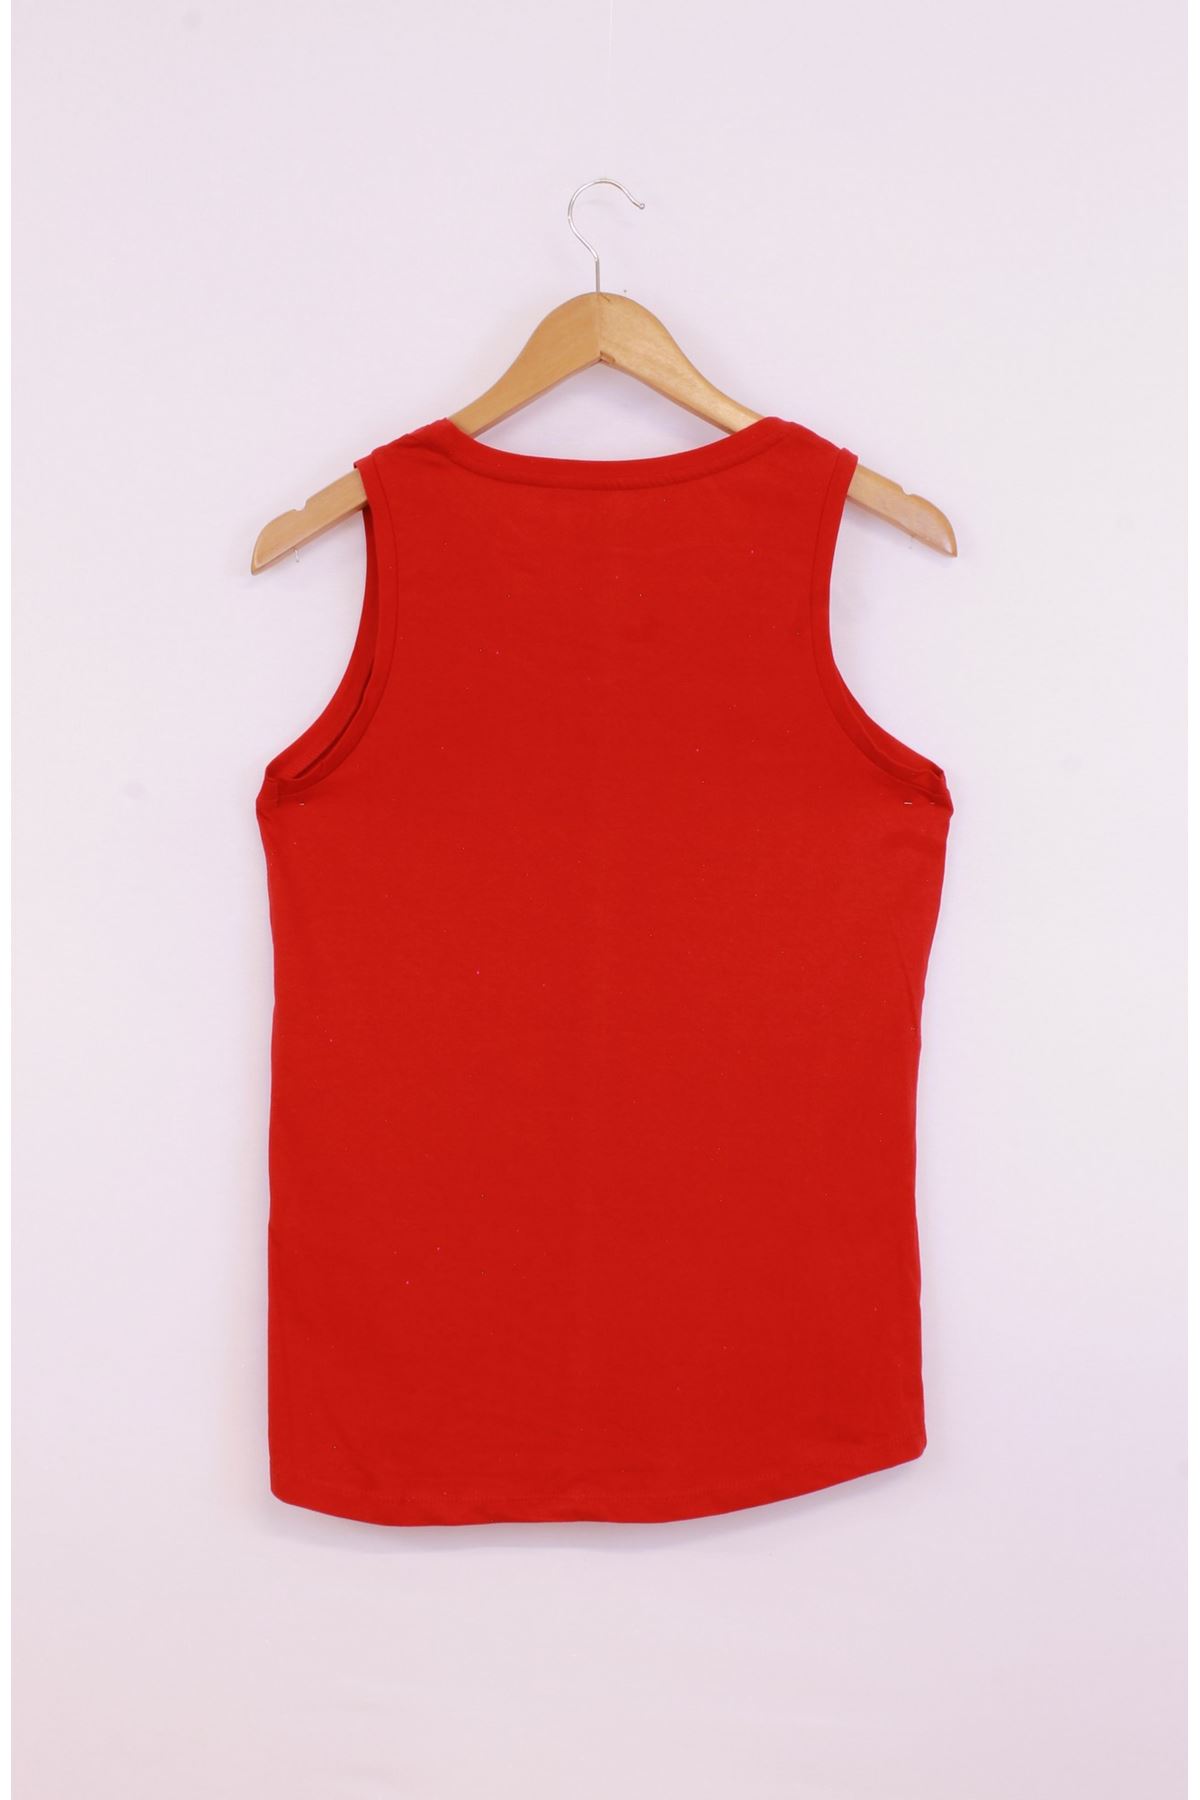 Giyinsen Kadın Kırmızı Tişört - 23YL71595010